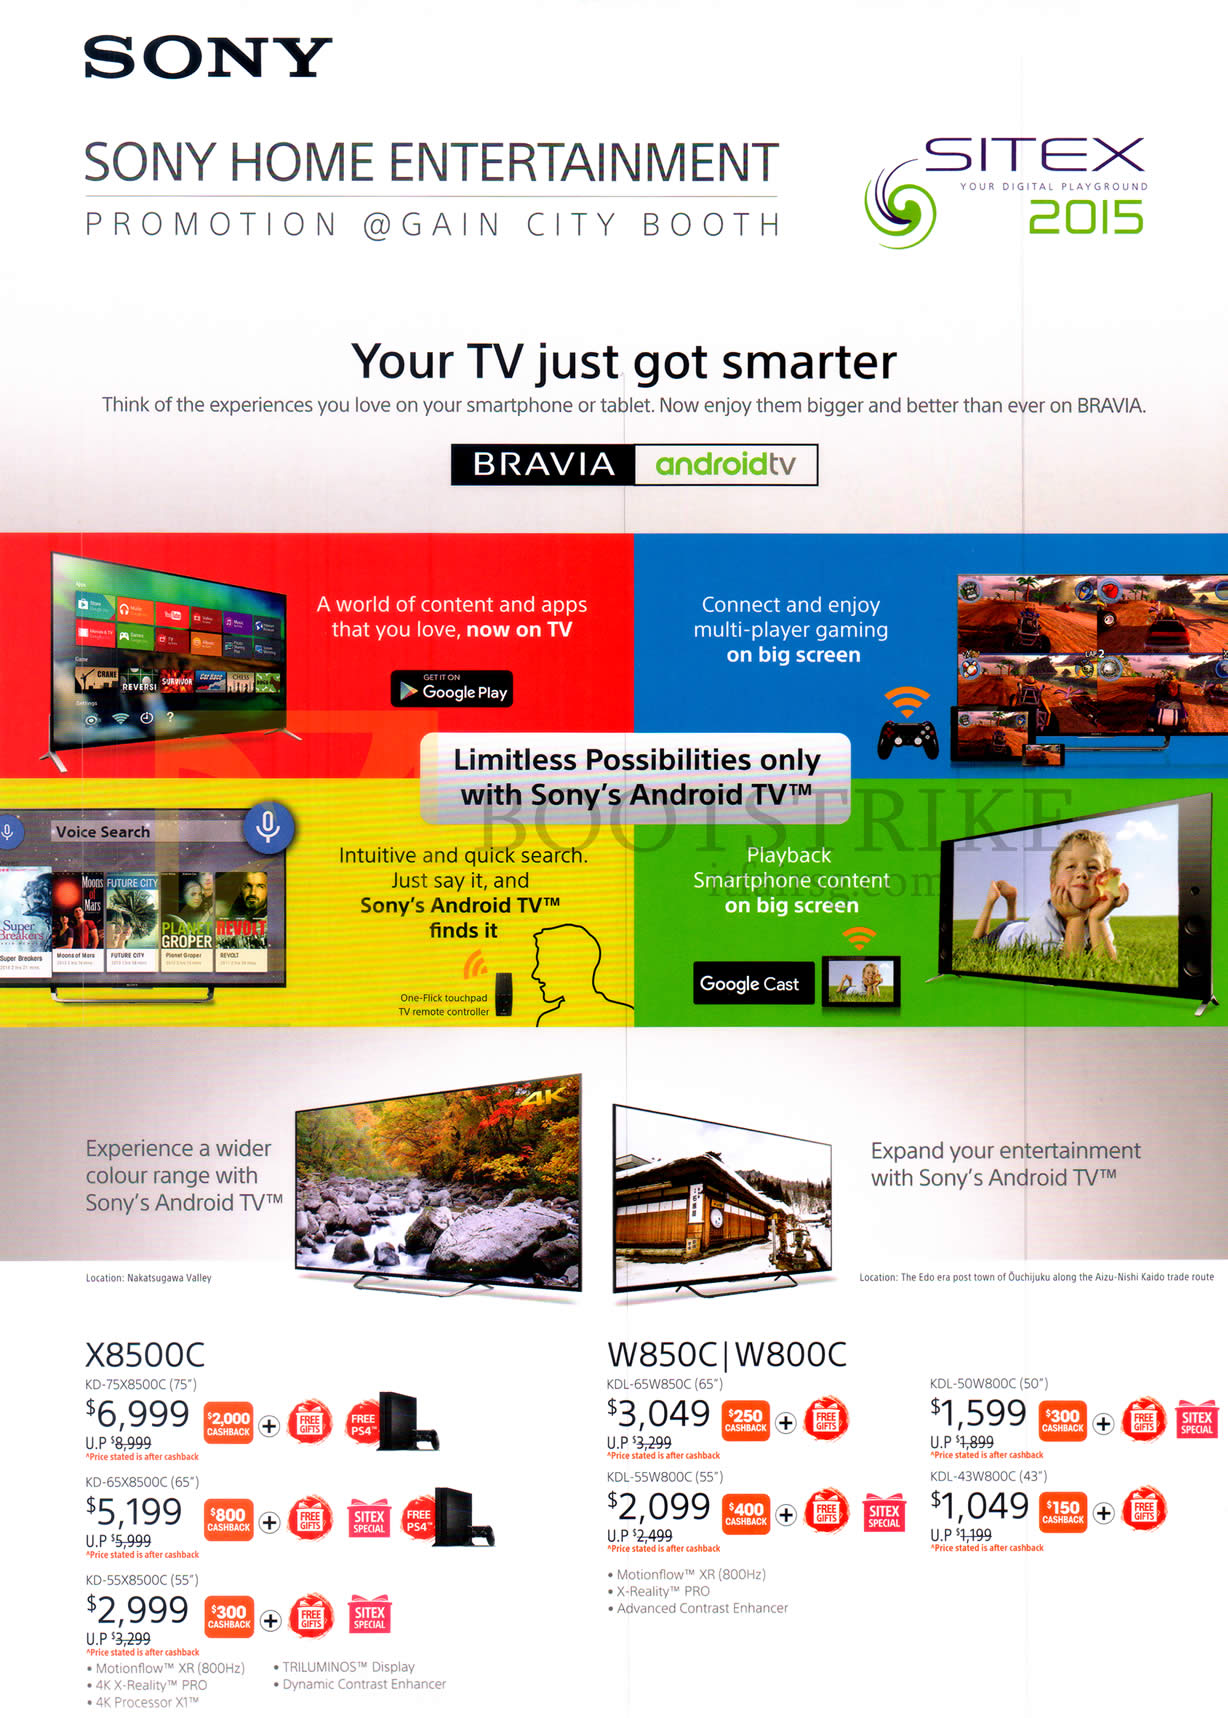 SITEX 2015 price list image brochure of Sony TVs KD-75X8500C, KD-65X8500C, KD-55X8500C, KDL-65W850C, KDL-SSW800C, KDL-50W800C, KDL-43W800C